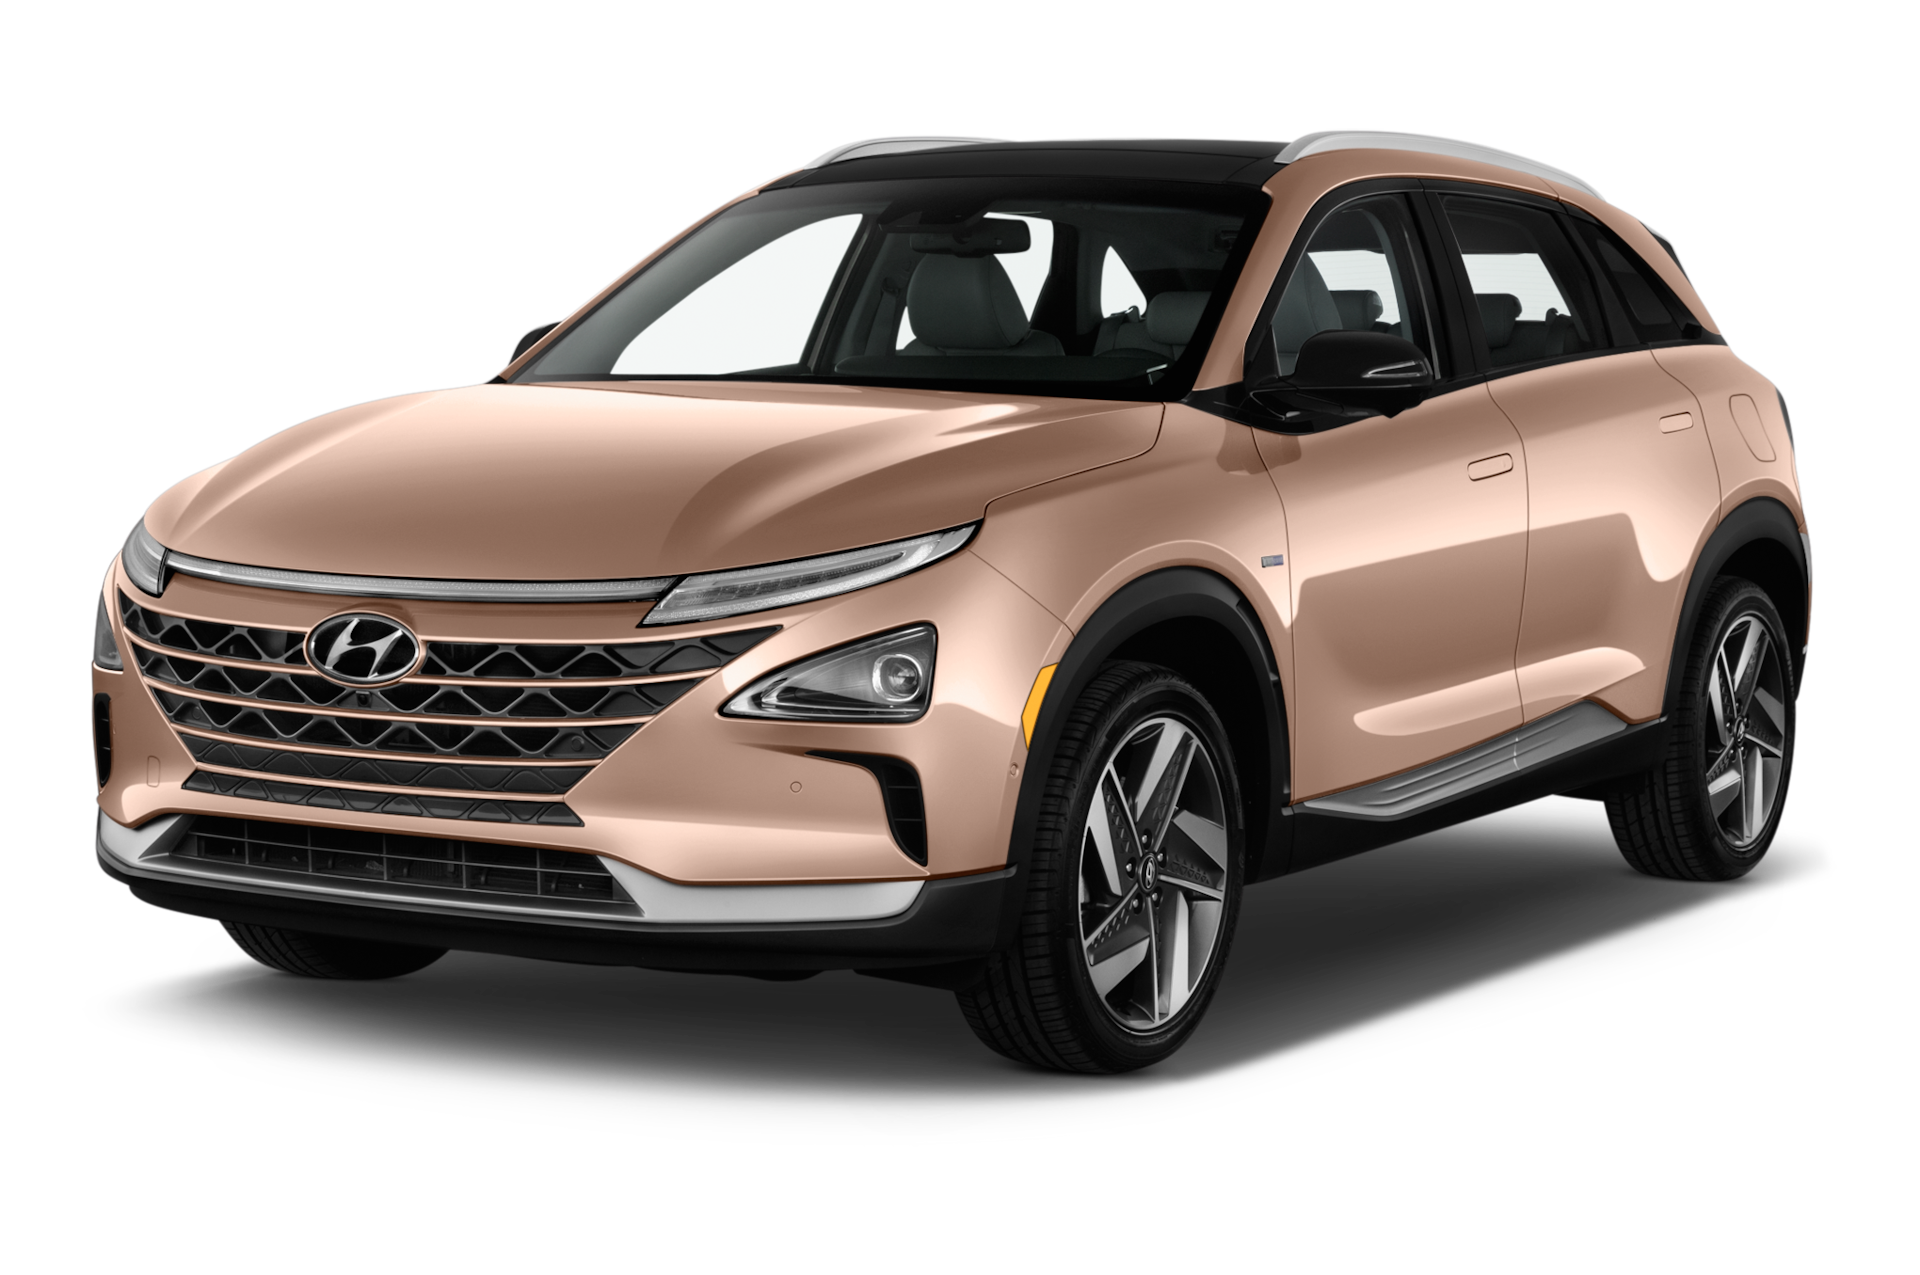 2020 Hyundai Nexo Prices, Reviews, and Photos - MotorTrend